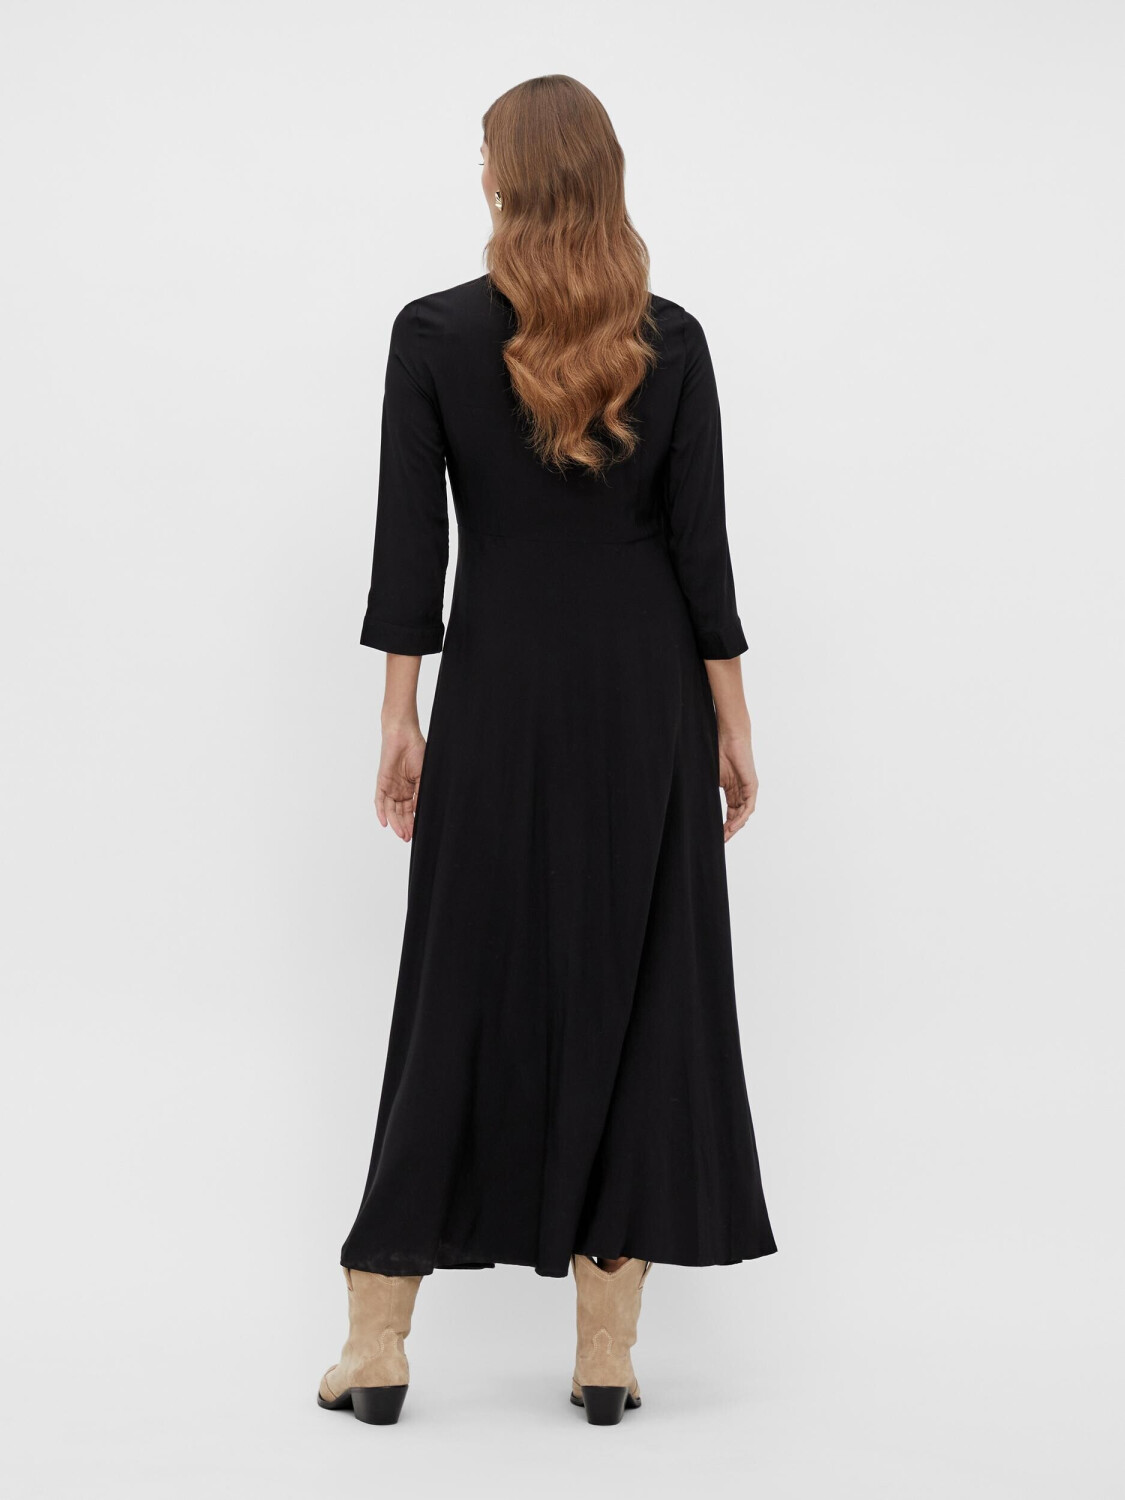 | € (26022663) S. ab Y.A.S Preisvergleich Noos bei 40,99 Shirt Long black - Yassavanna Dress